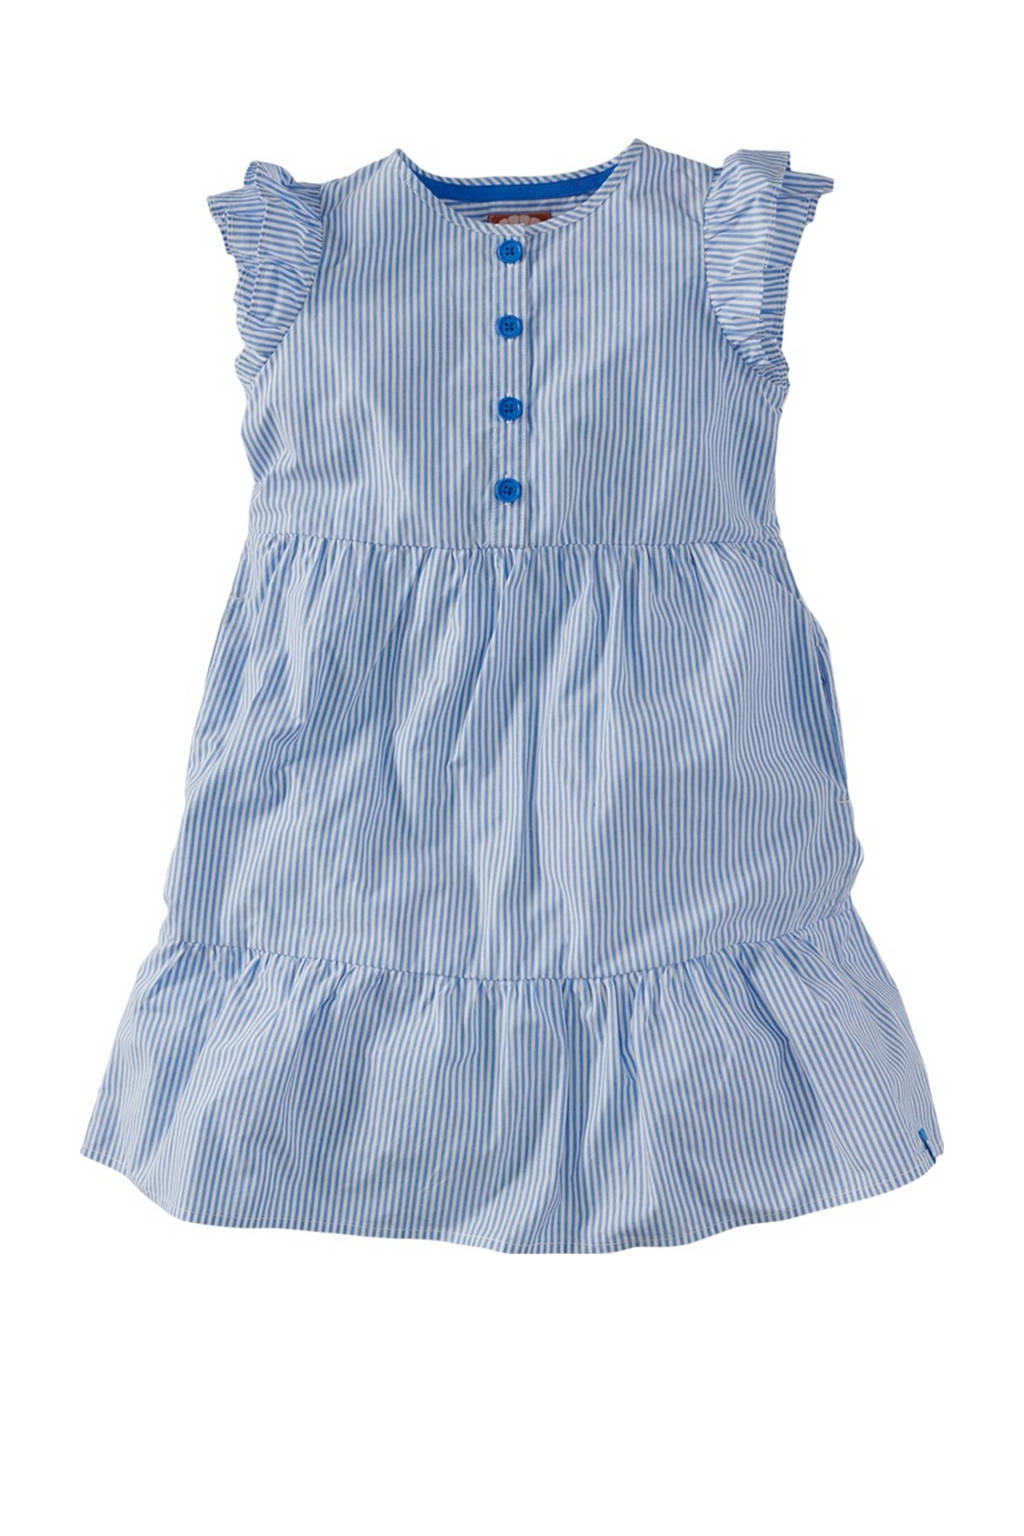 Z8 gestreepte jurk Audrey blauw/wit